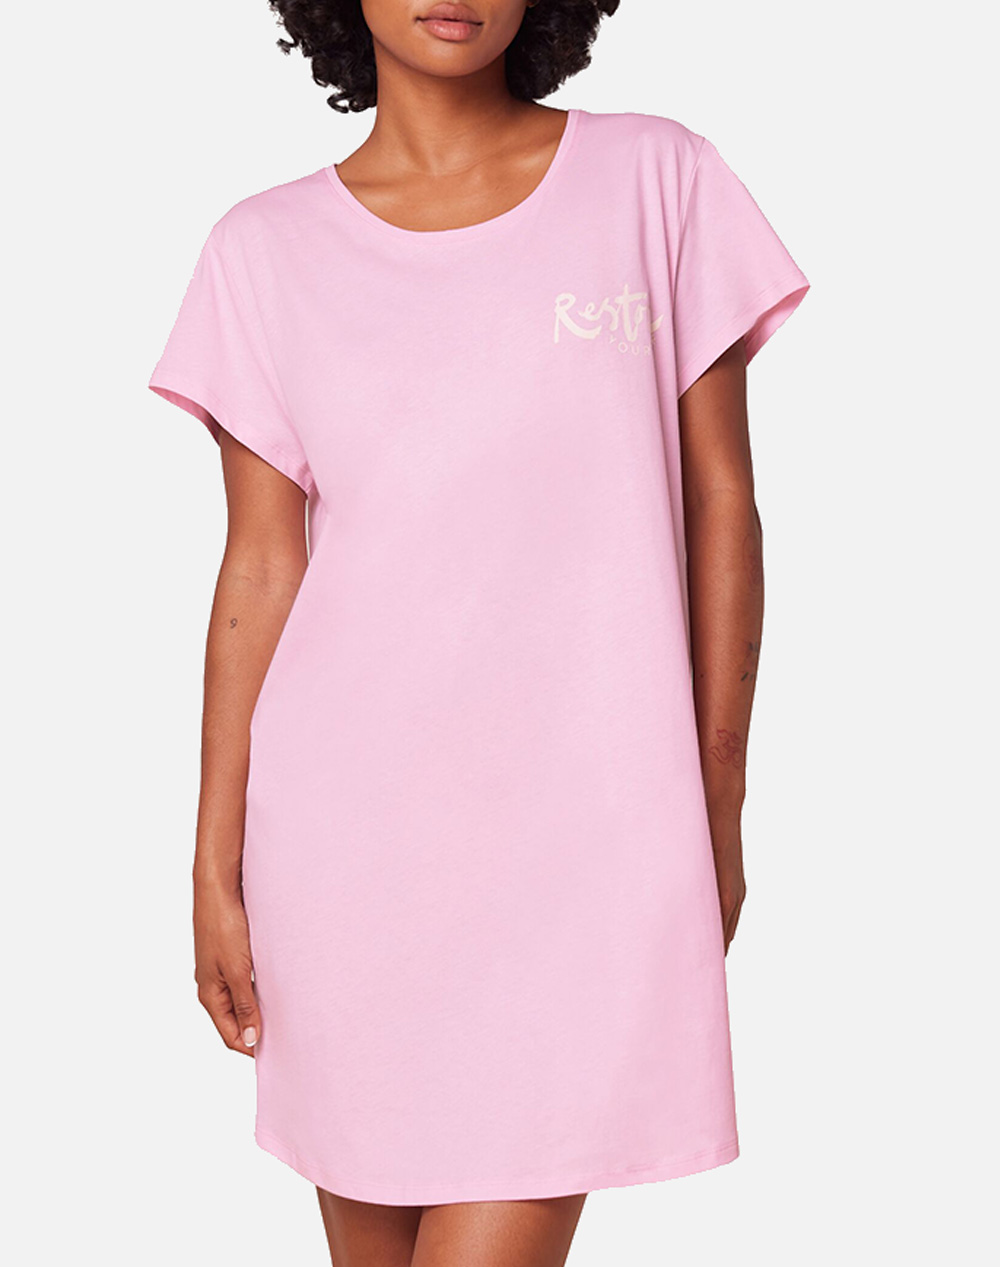 TRIUMPH Nightdresses NDK 02 X 10215185-1588 Pink